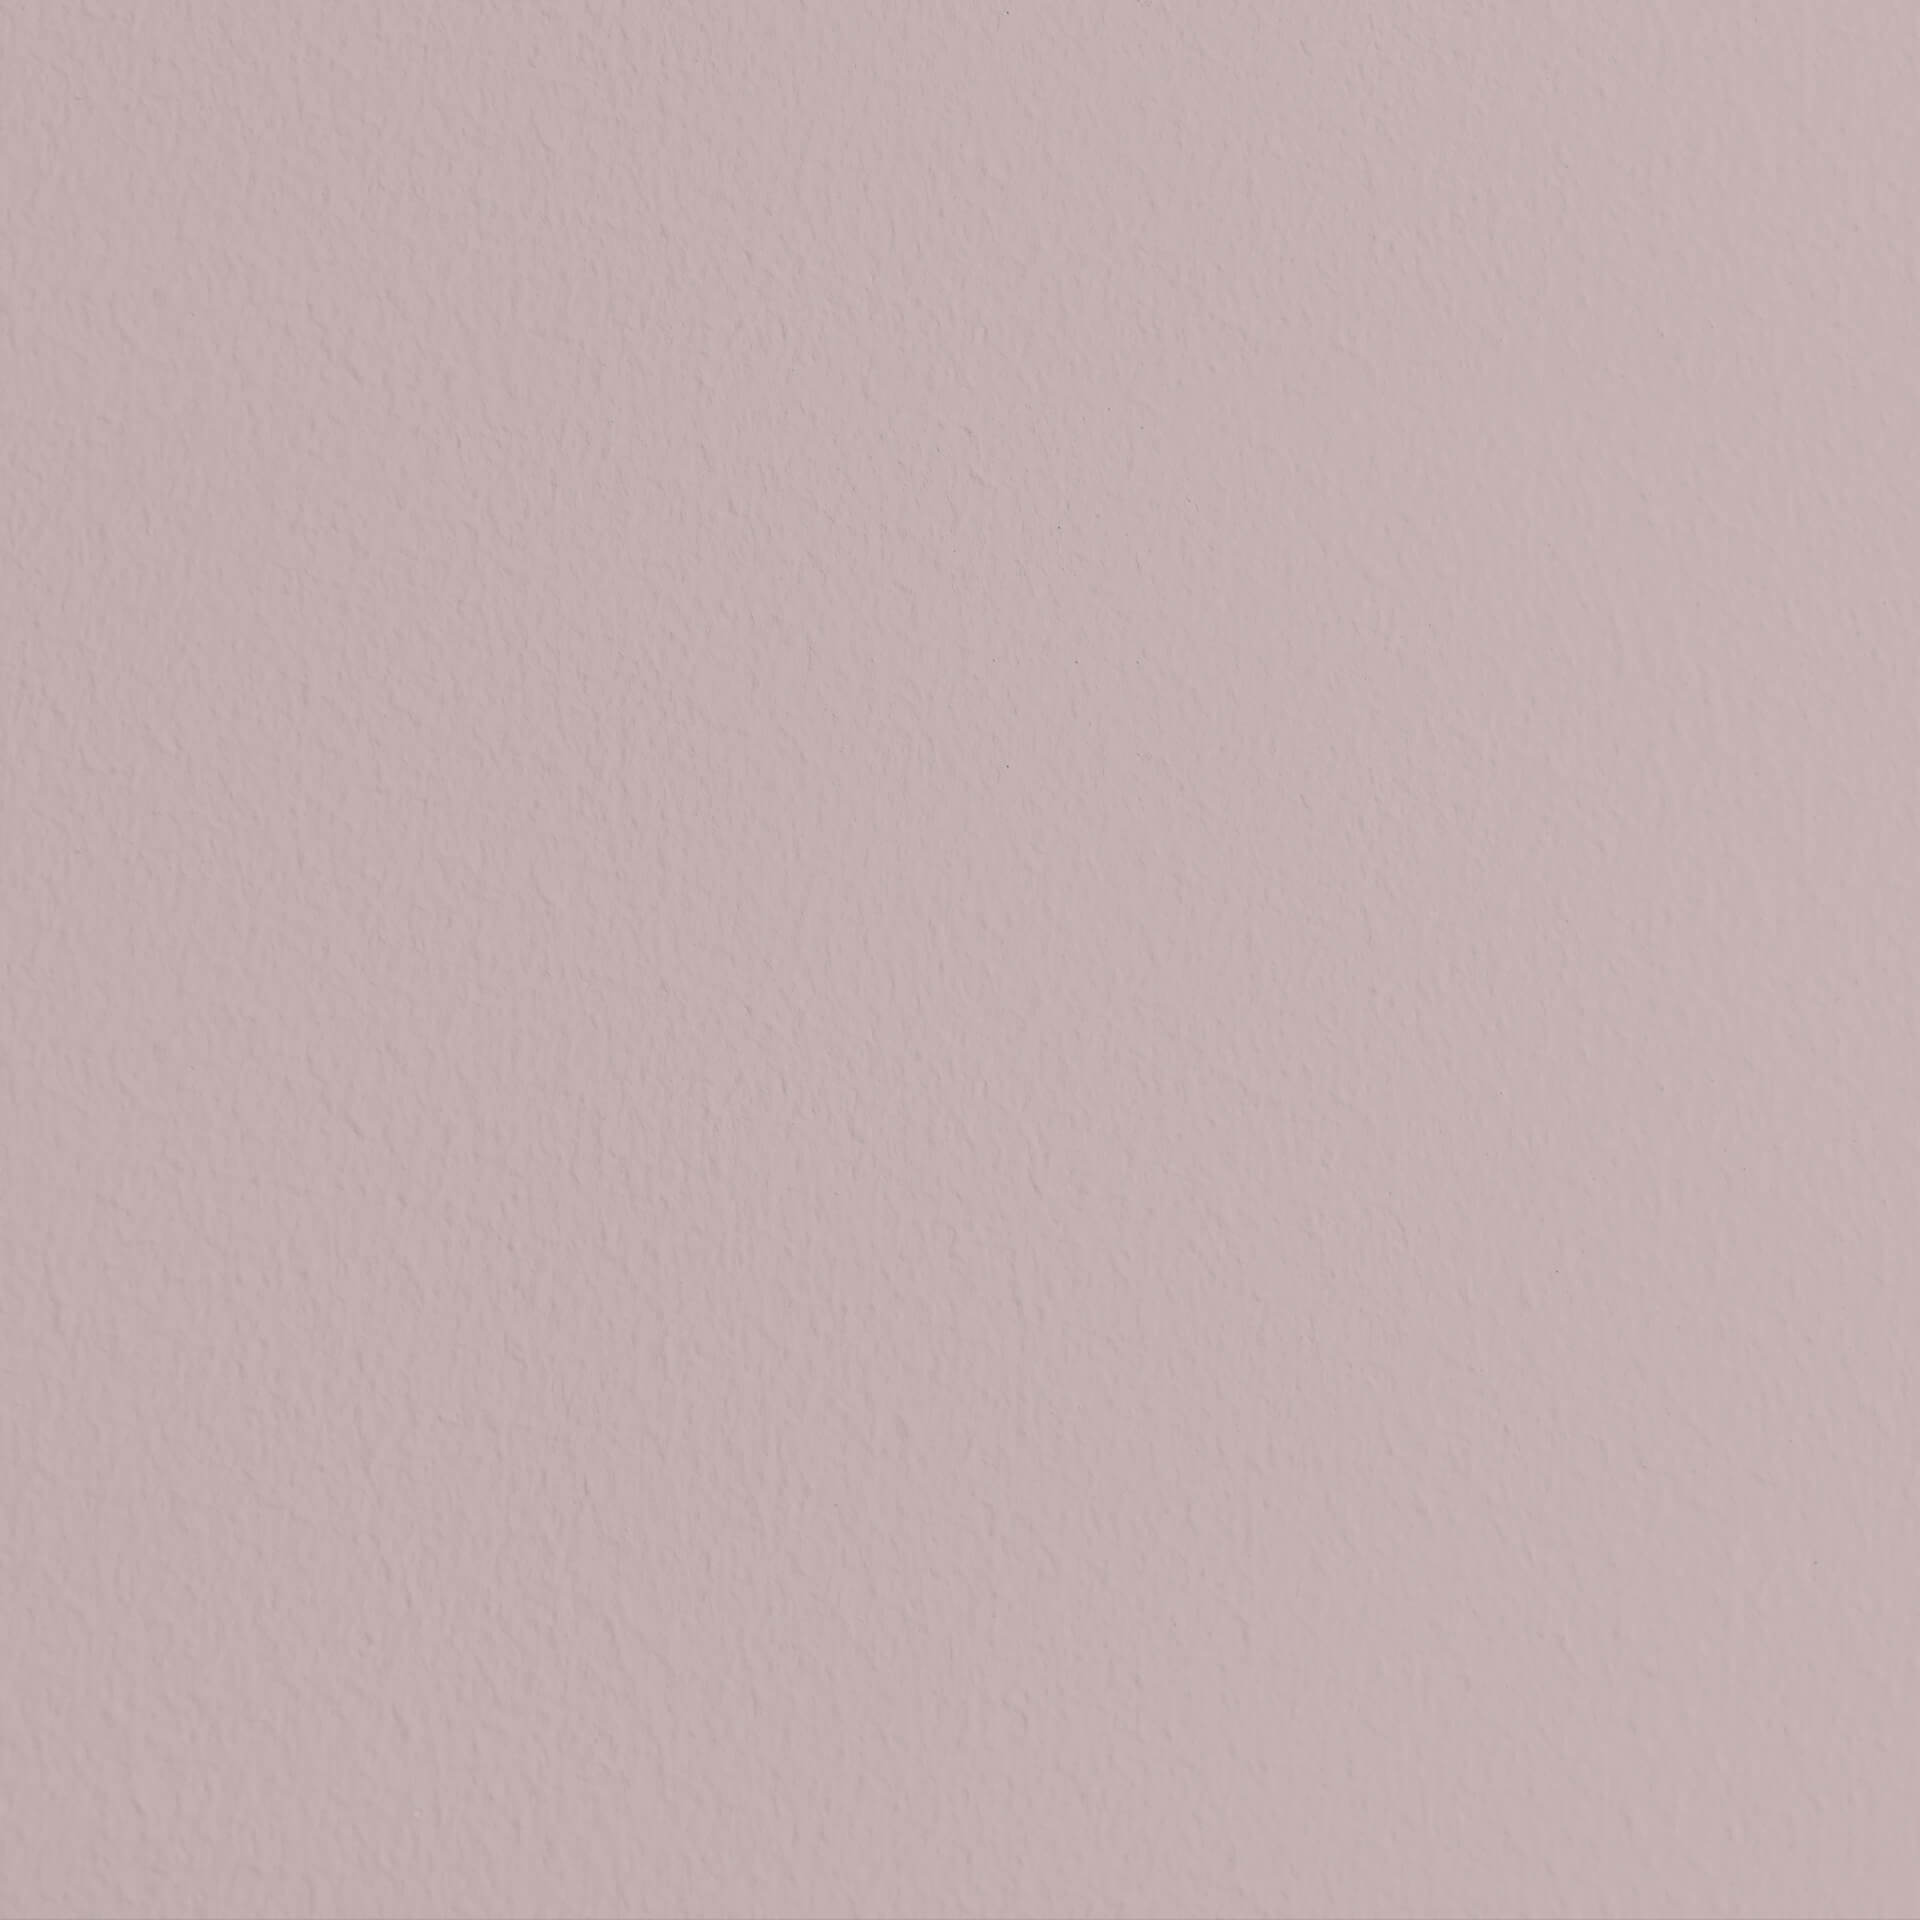 Mylands Pale Lilac No. 246 - Marble Matt Emulsion / Wandfarbe, 5L